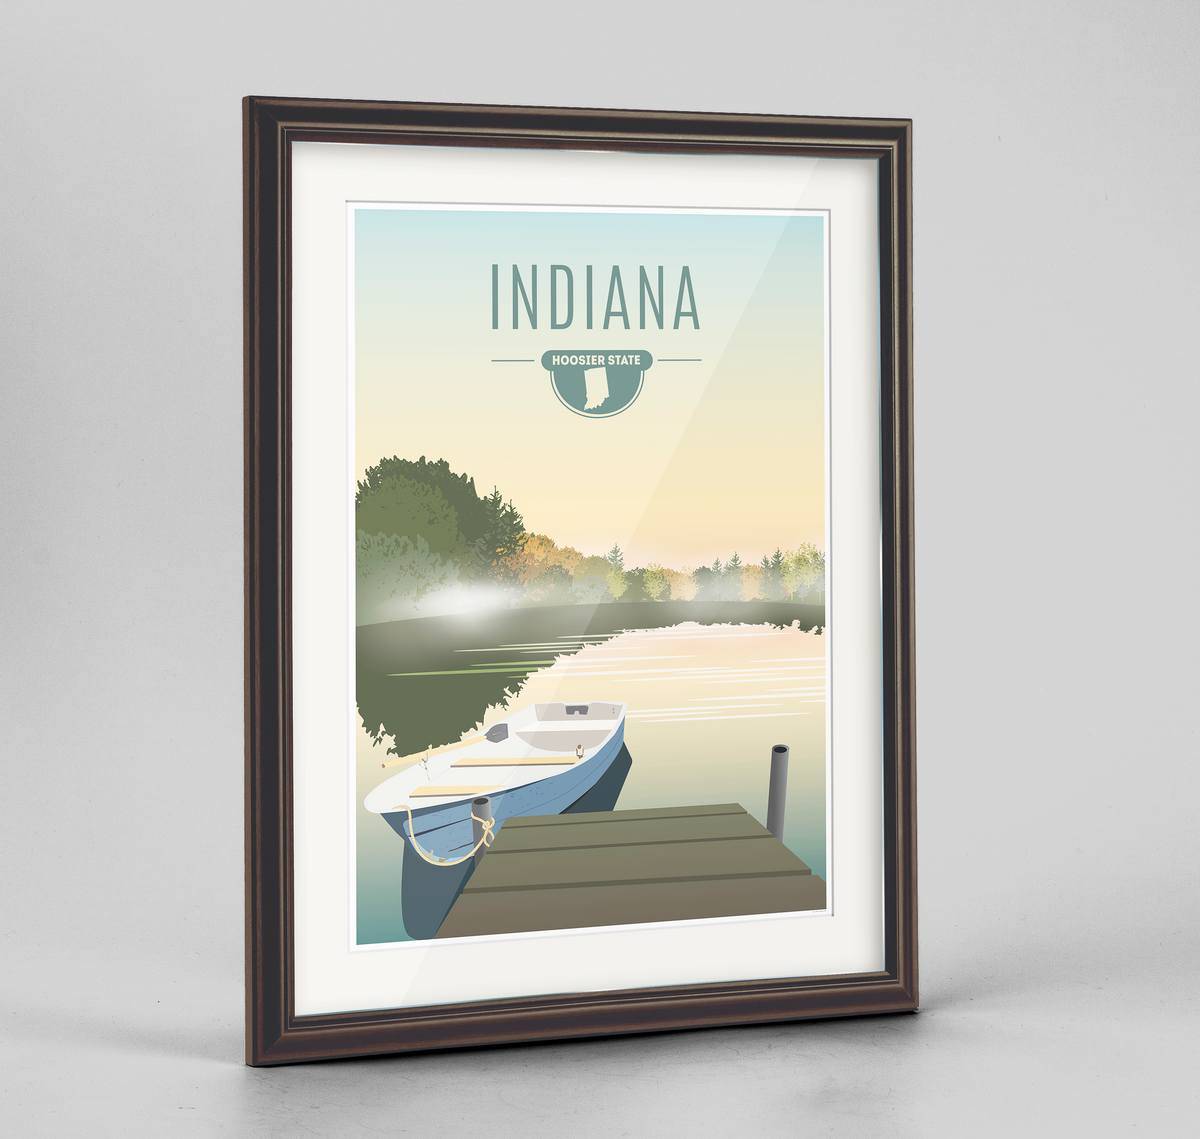 Indiana State Frame Print